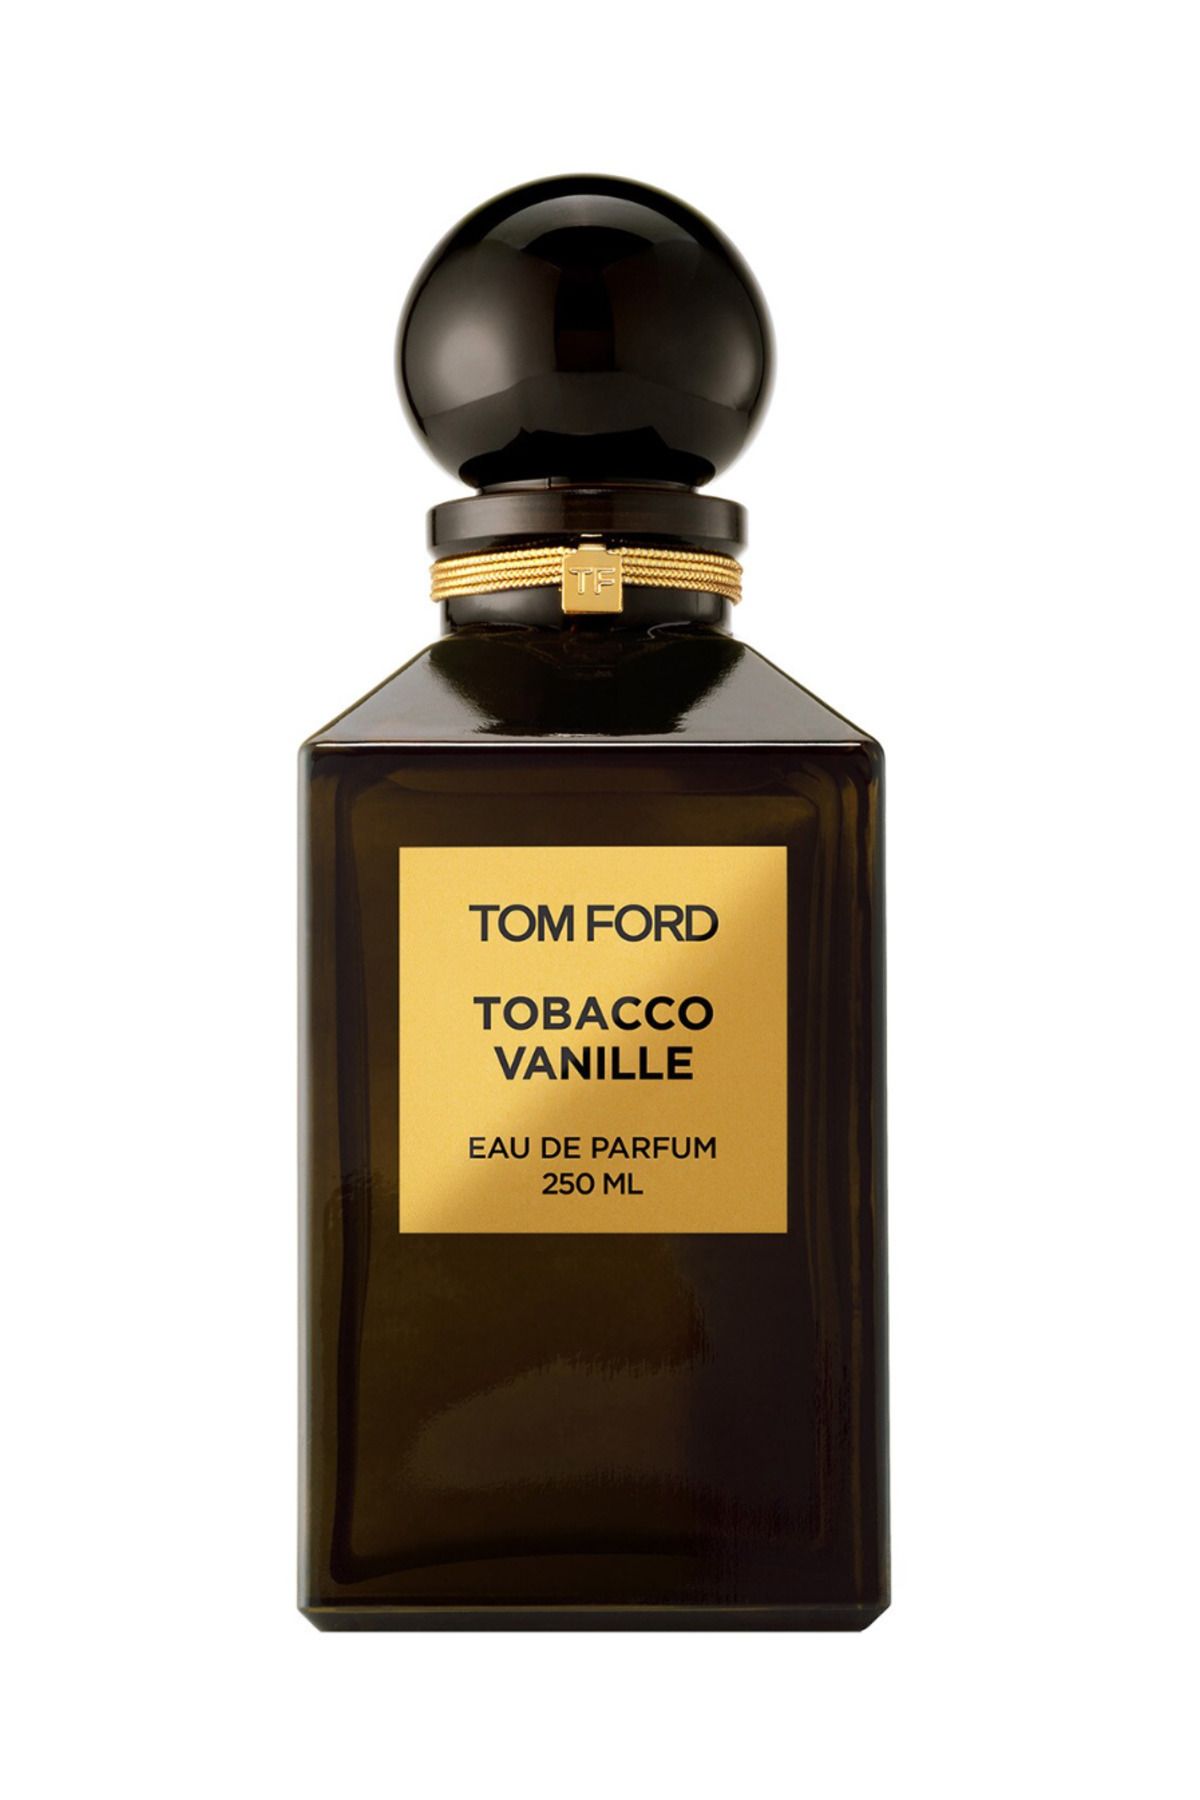 Tom Ford Tobacco Vanille Eau de Parfum Edp 250 ml